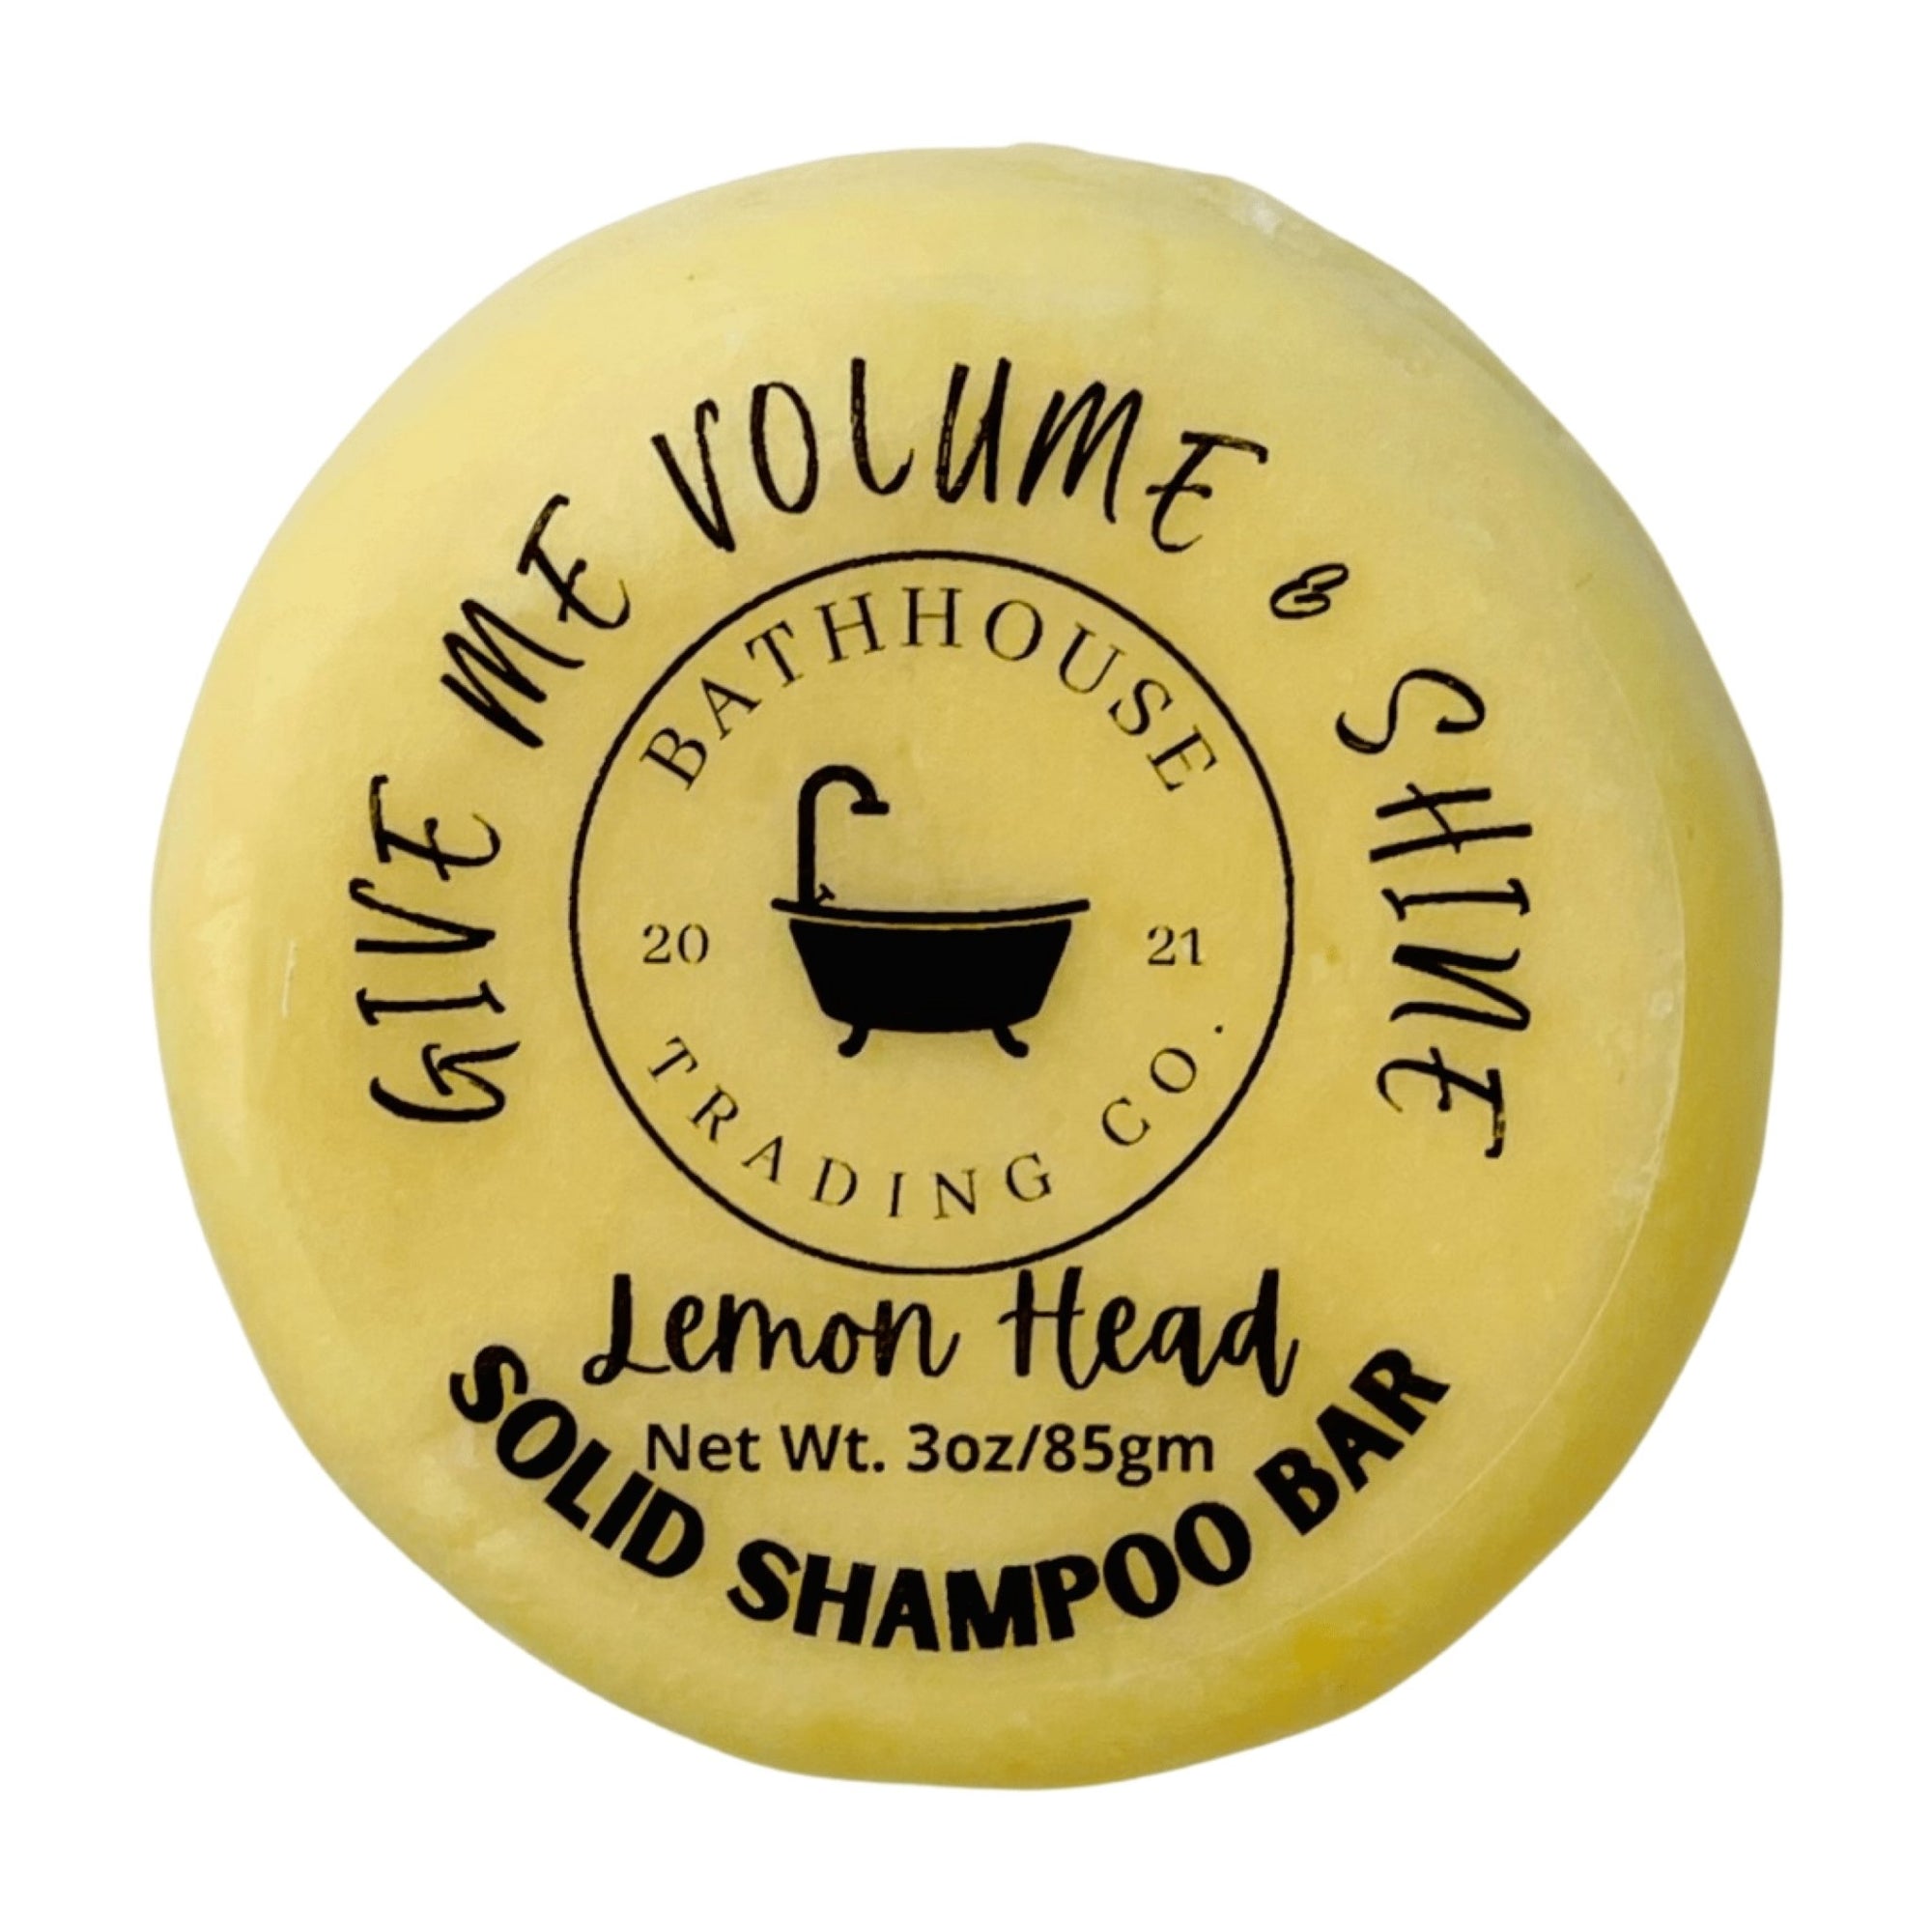 Lemon Head Solid Shampoo - Bathhouse Trading Company